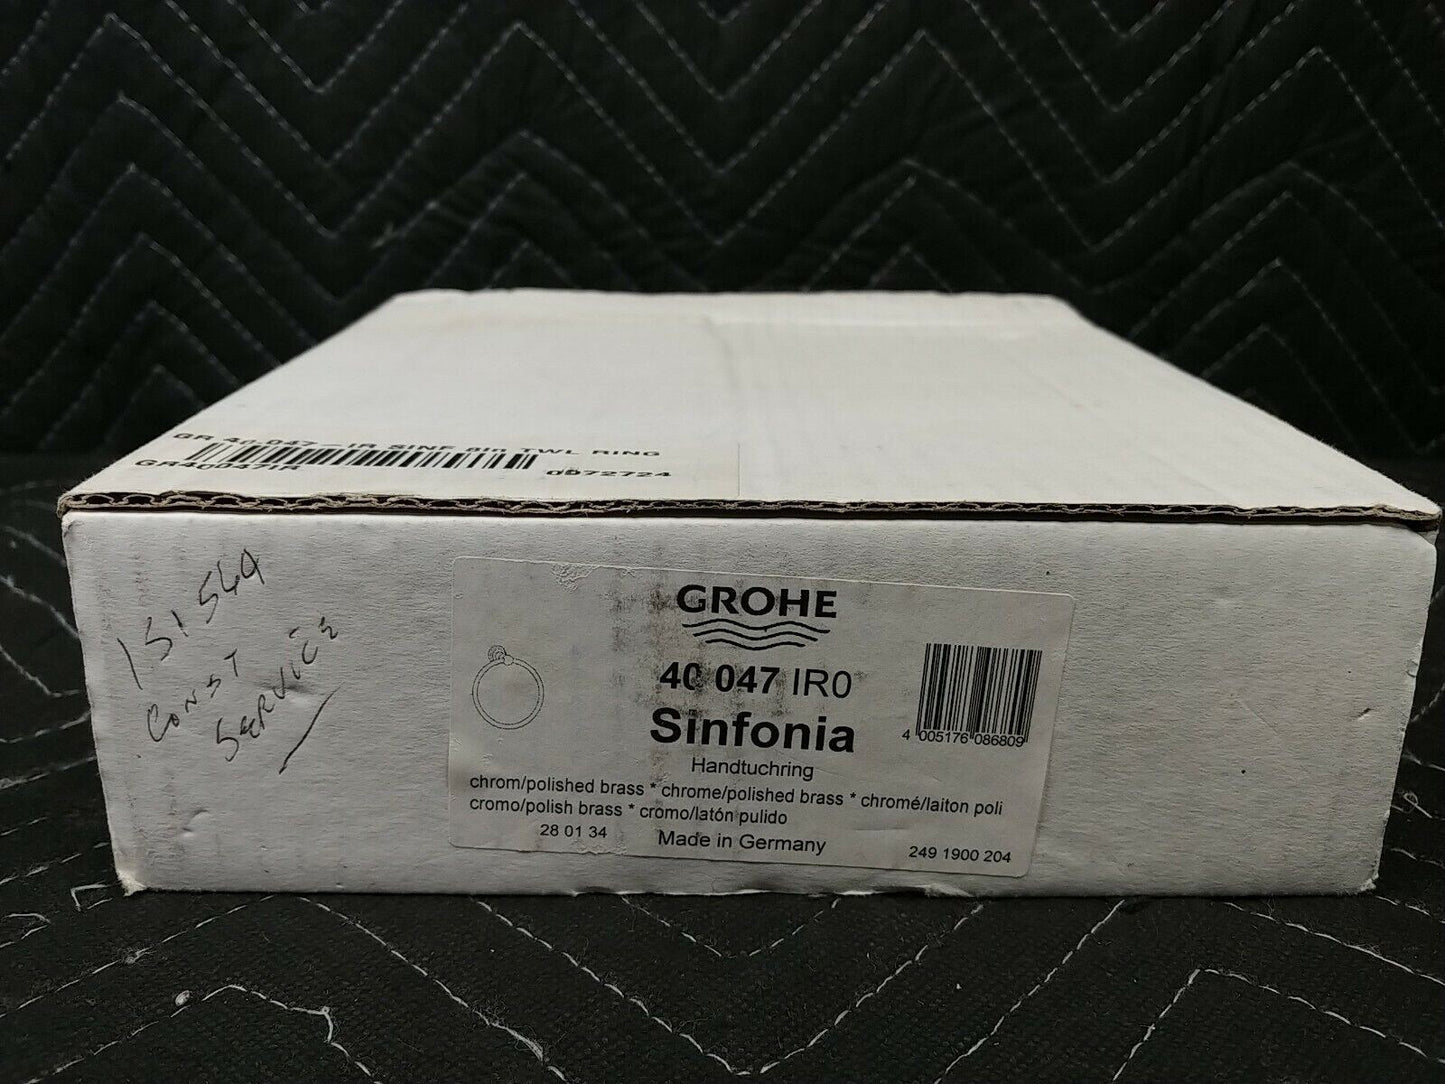 Grohe 40 047 IRO Chrome 8" Wall Mounted Towel Ring